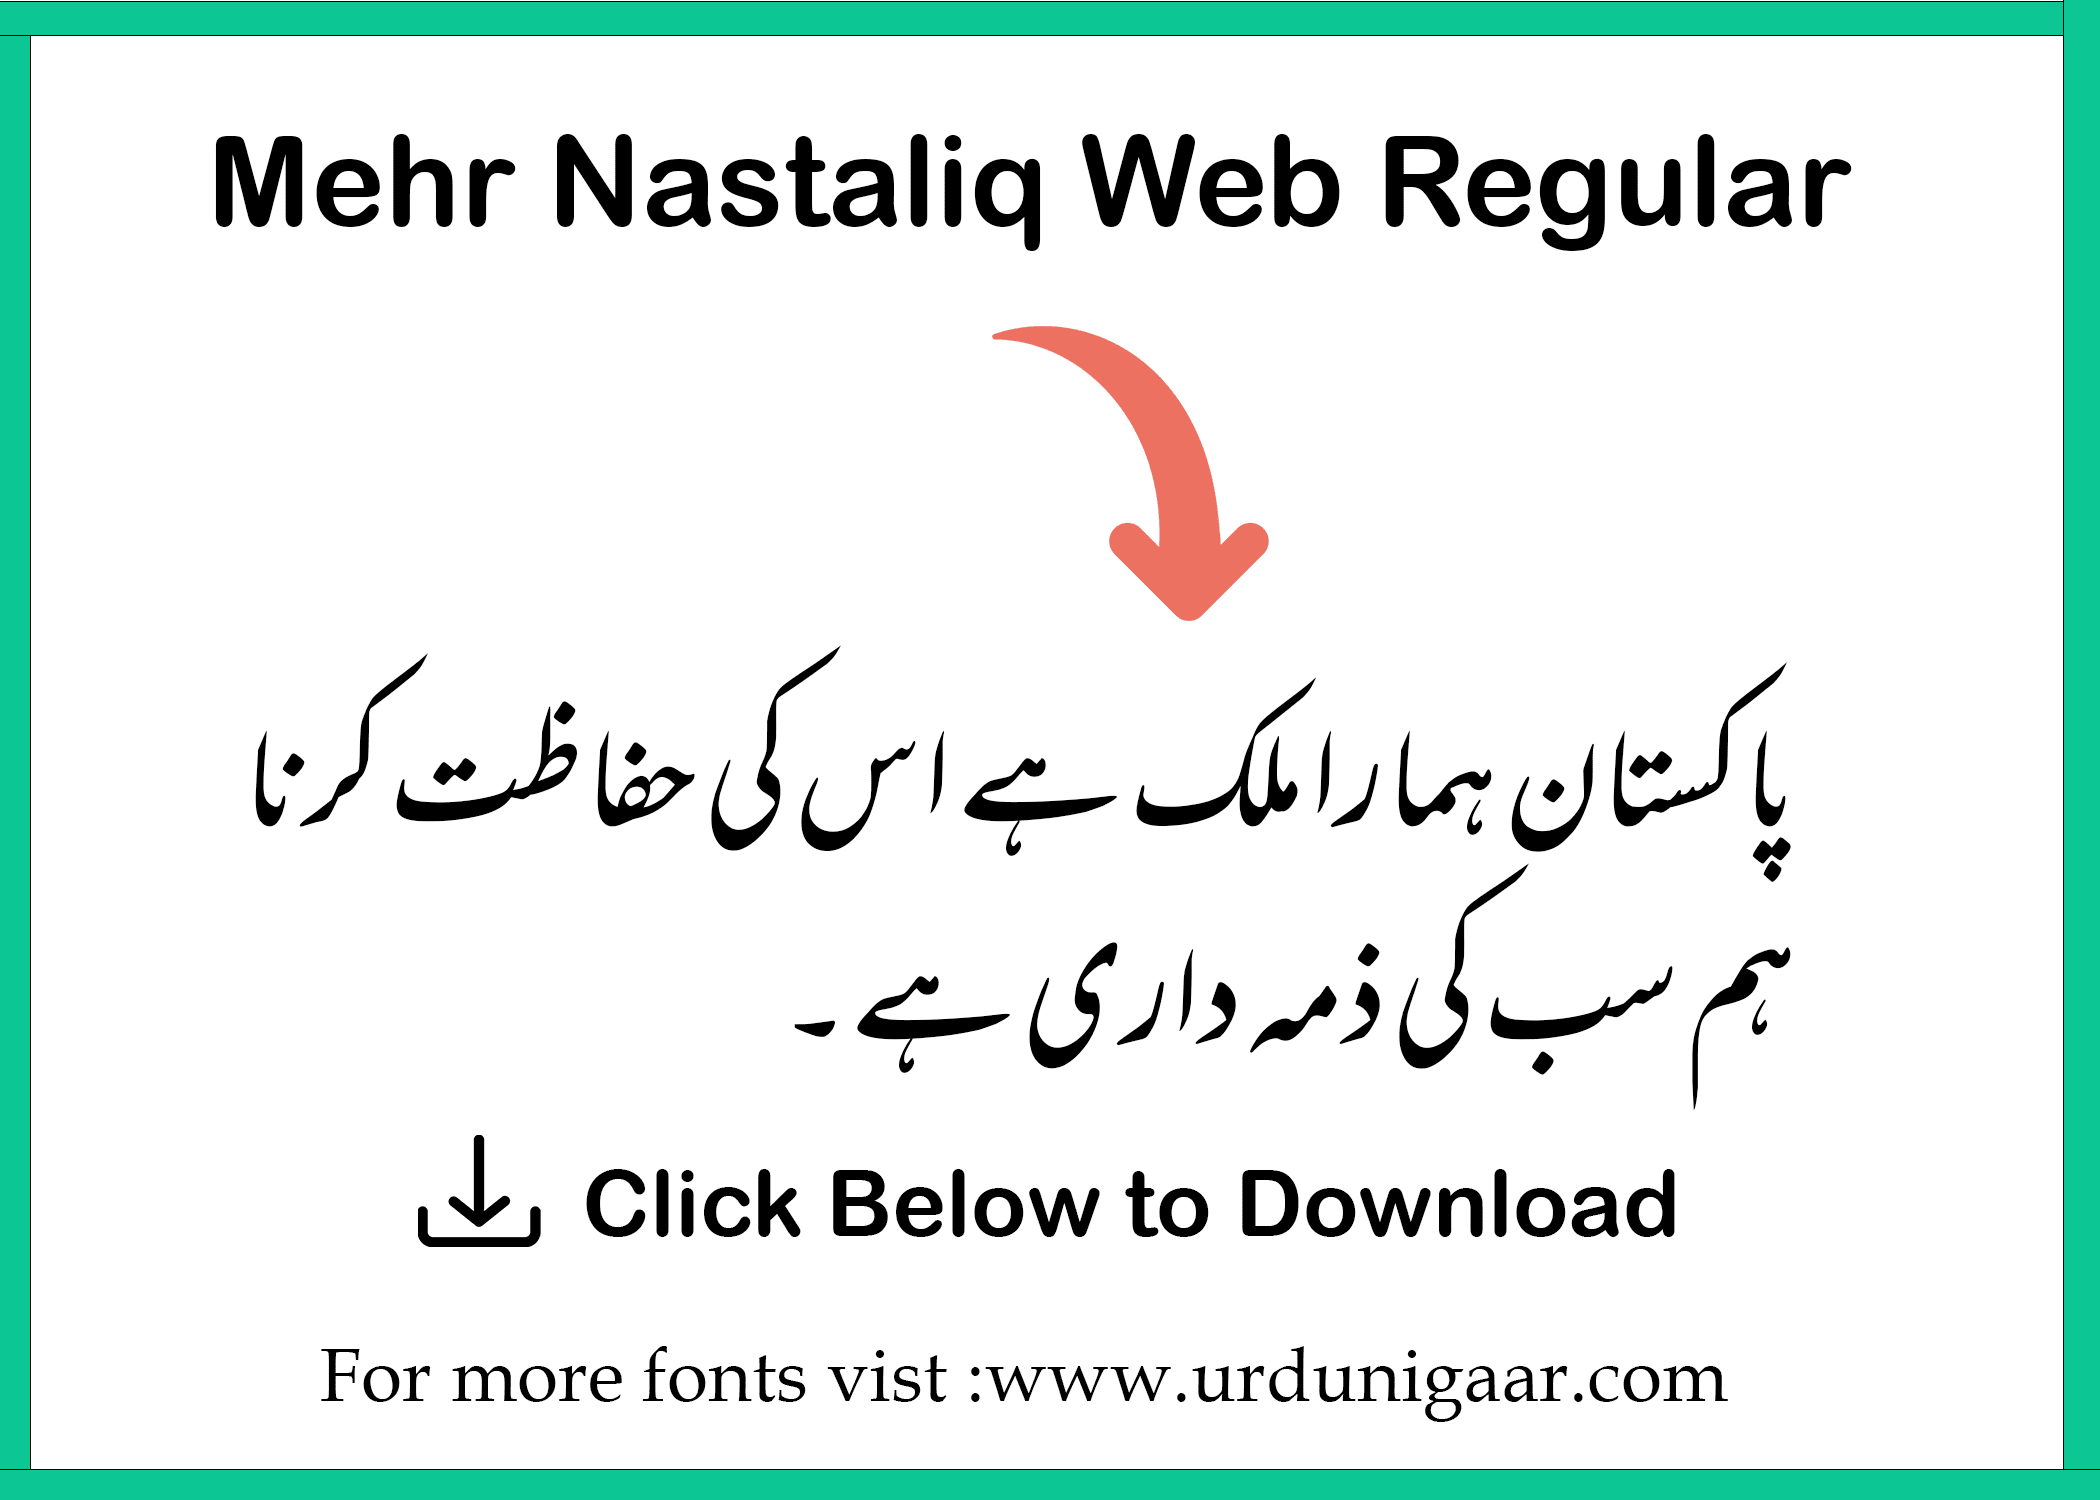 Mehr Nastaliq Web Regular best urdu font for canva